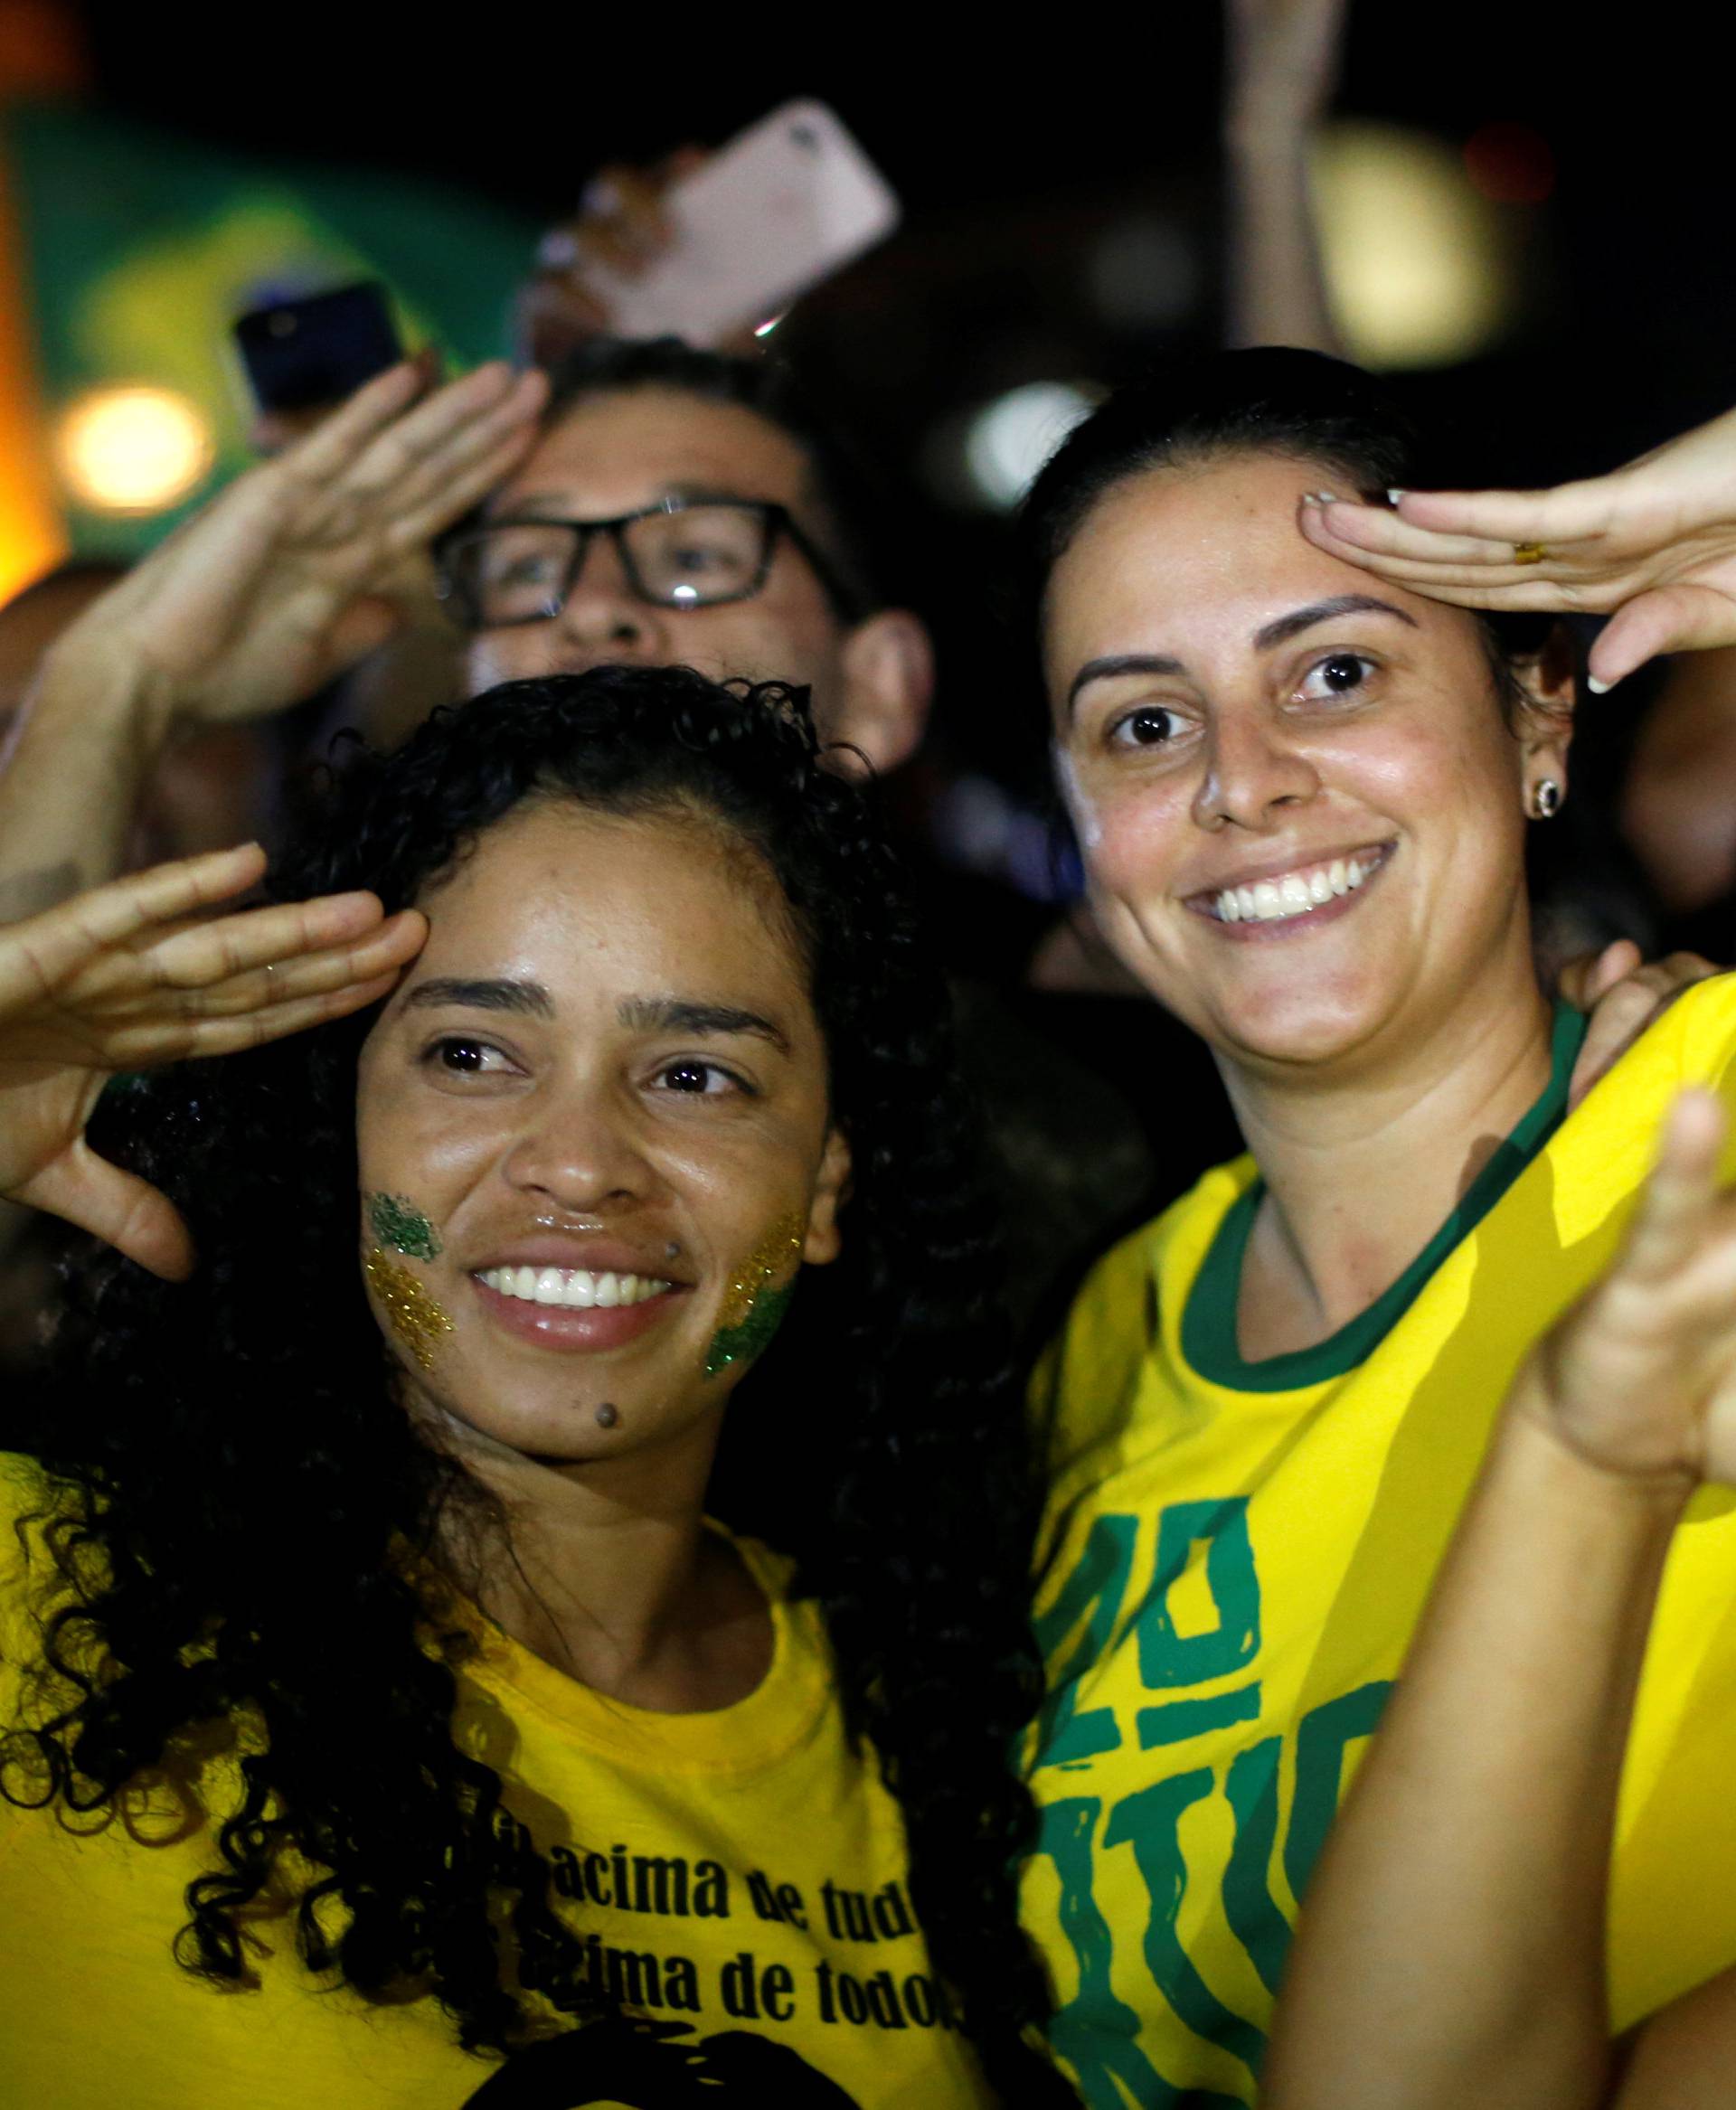 Supporters of Jair Bolsonaro react after Bolsonaro won the presidential race, in Brasilia